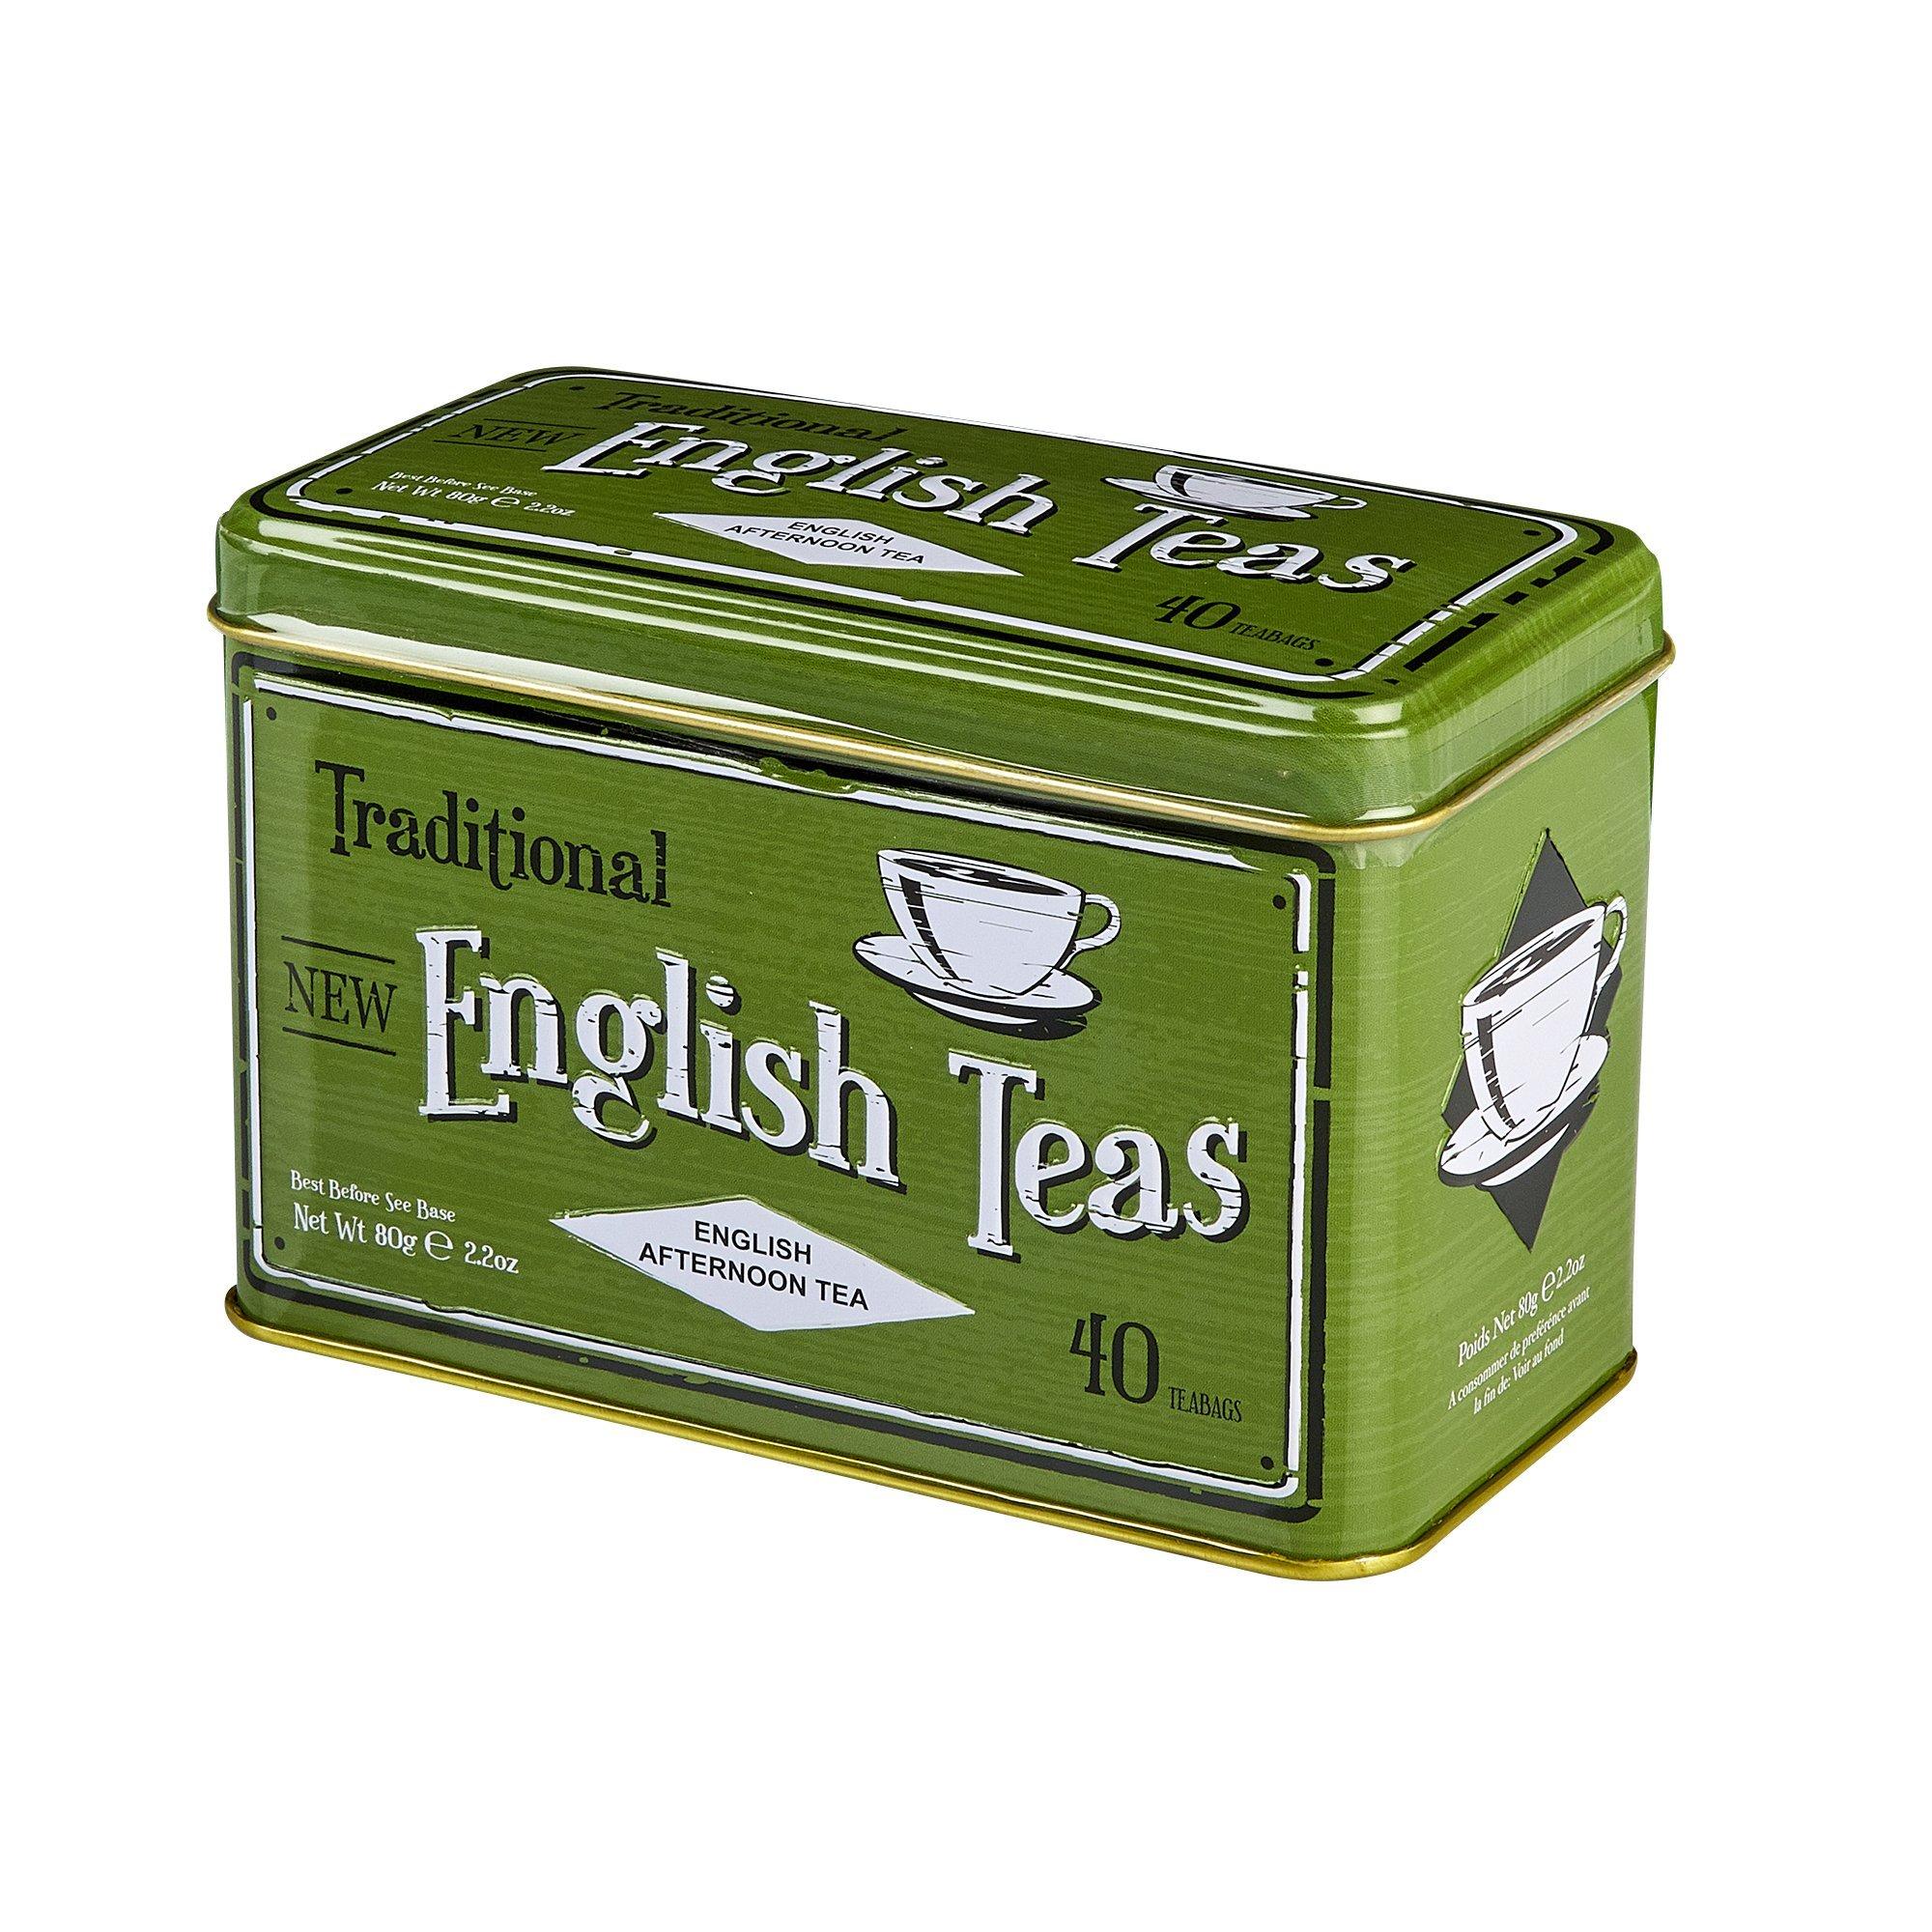 Vintage Selection English Afternoon Tea Tin 40 Teabags Black Tea New English Teas 